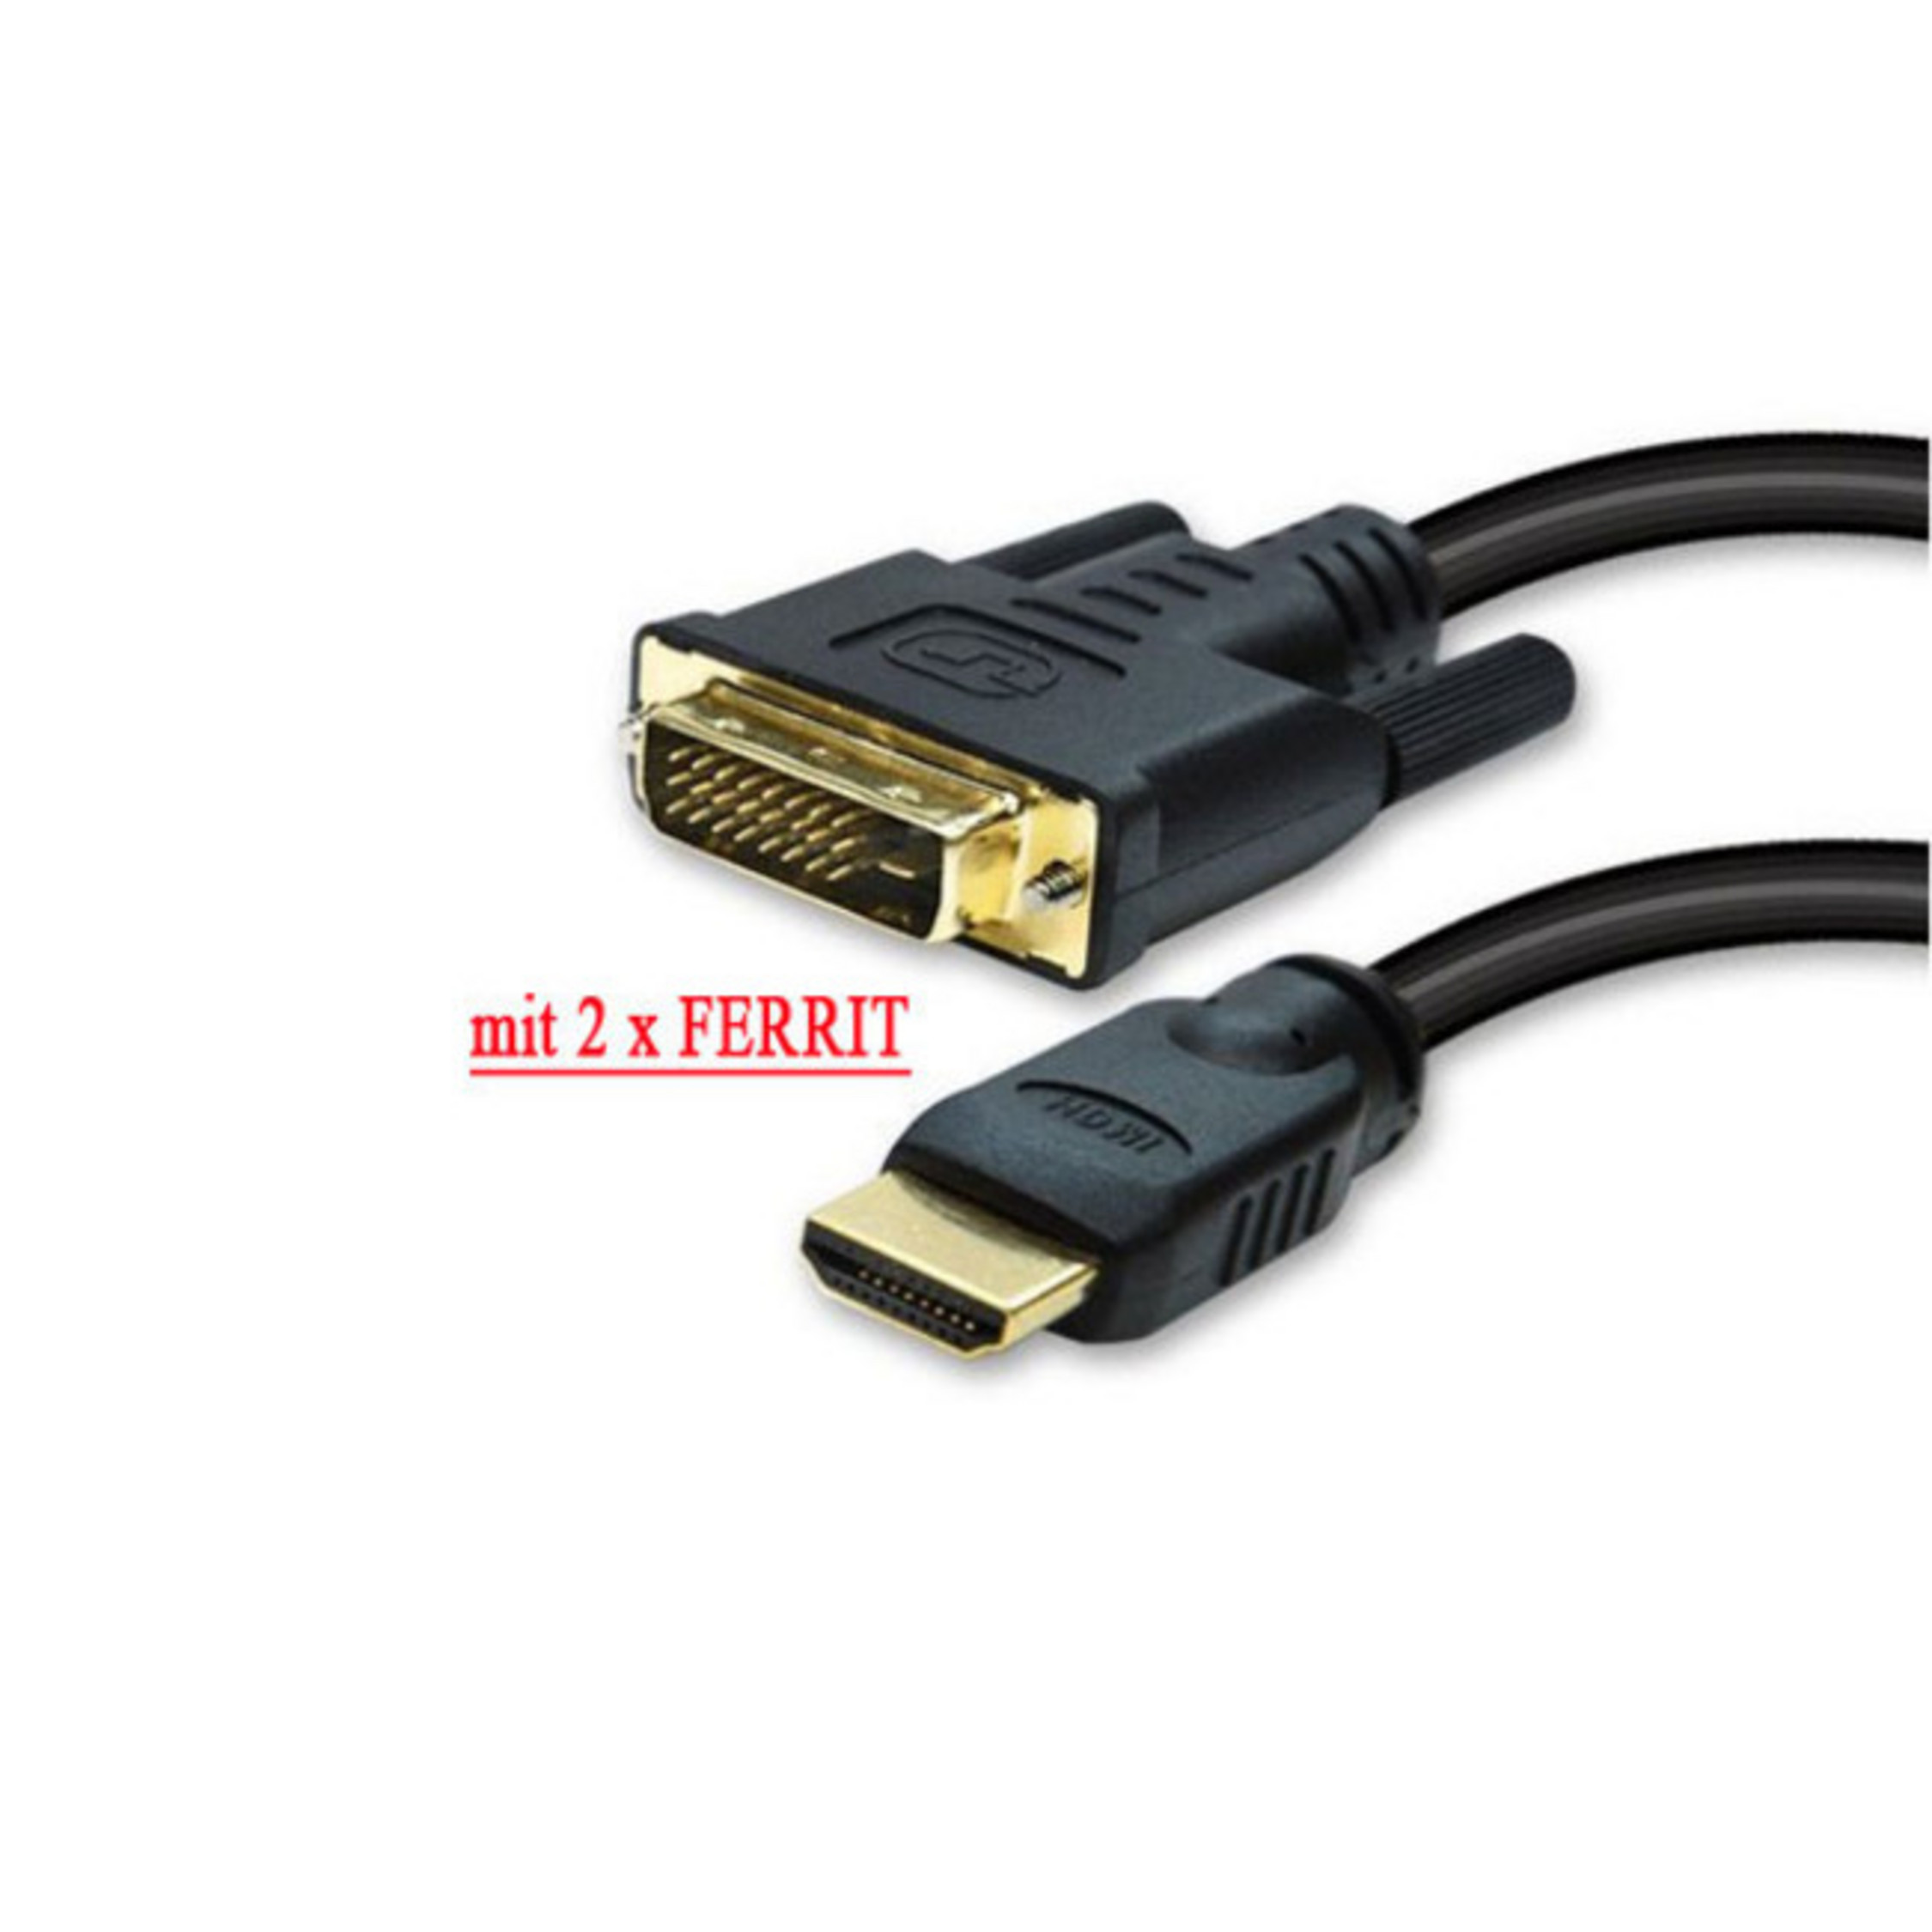 S/CONN MAXIMUM CONNECTIVITY HDMI Ferrit verg. HDMI 18+1 5m Kabel Stecker Stecker / DVI-D